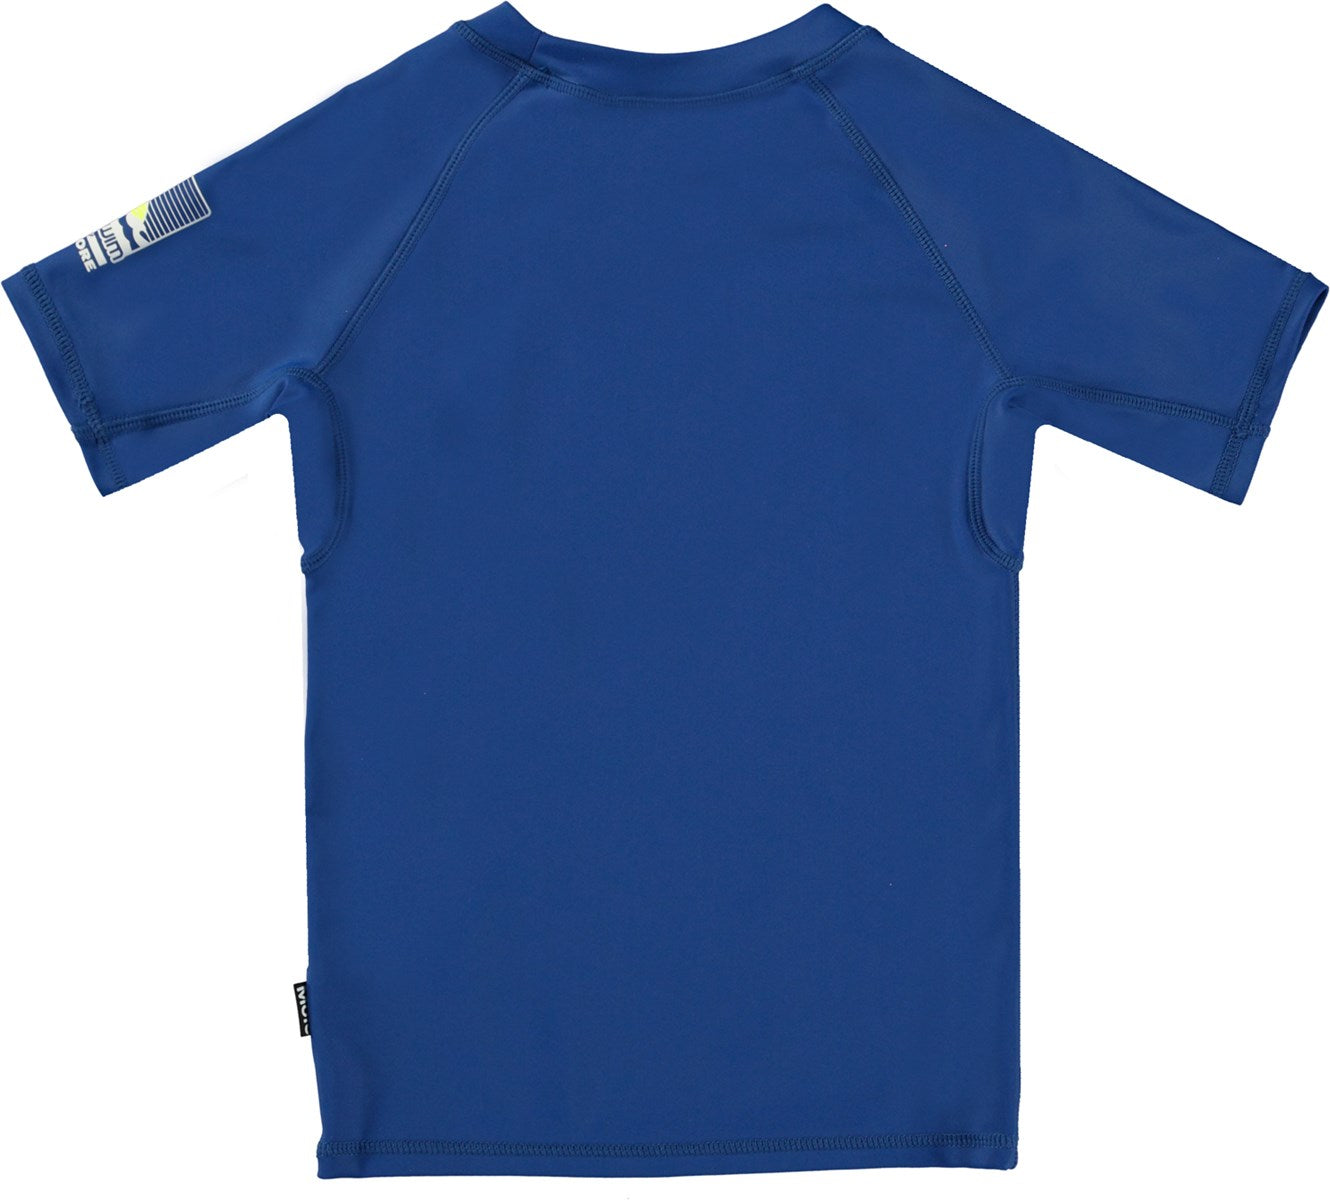 Molo - Neptune Swimming T-Shirt